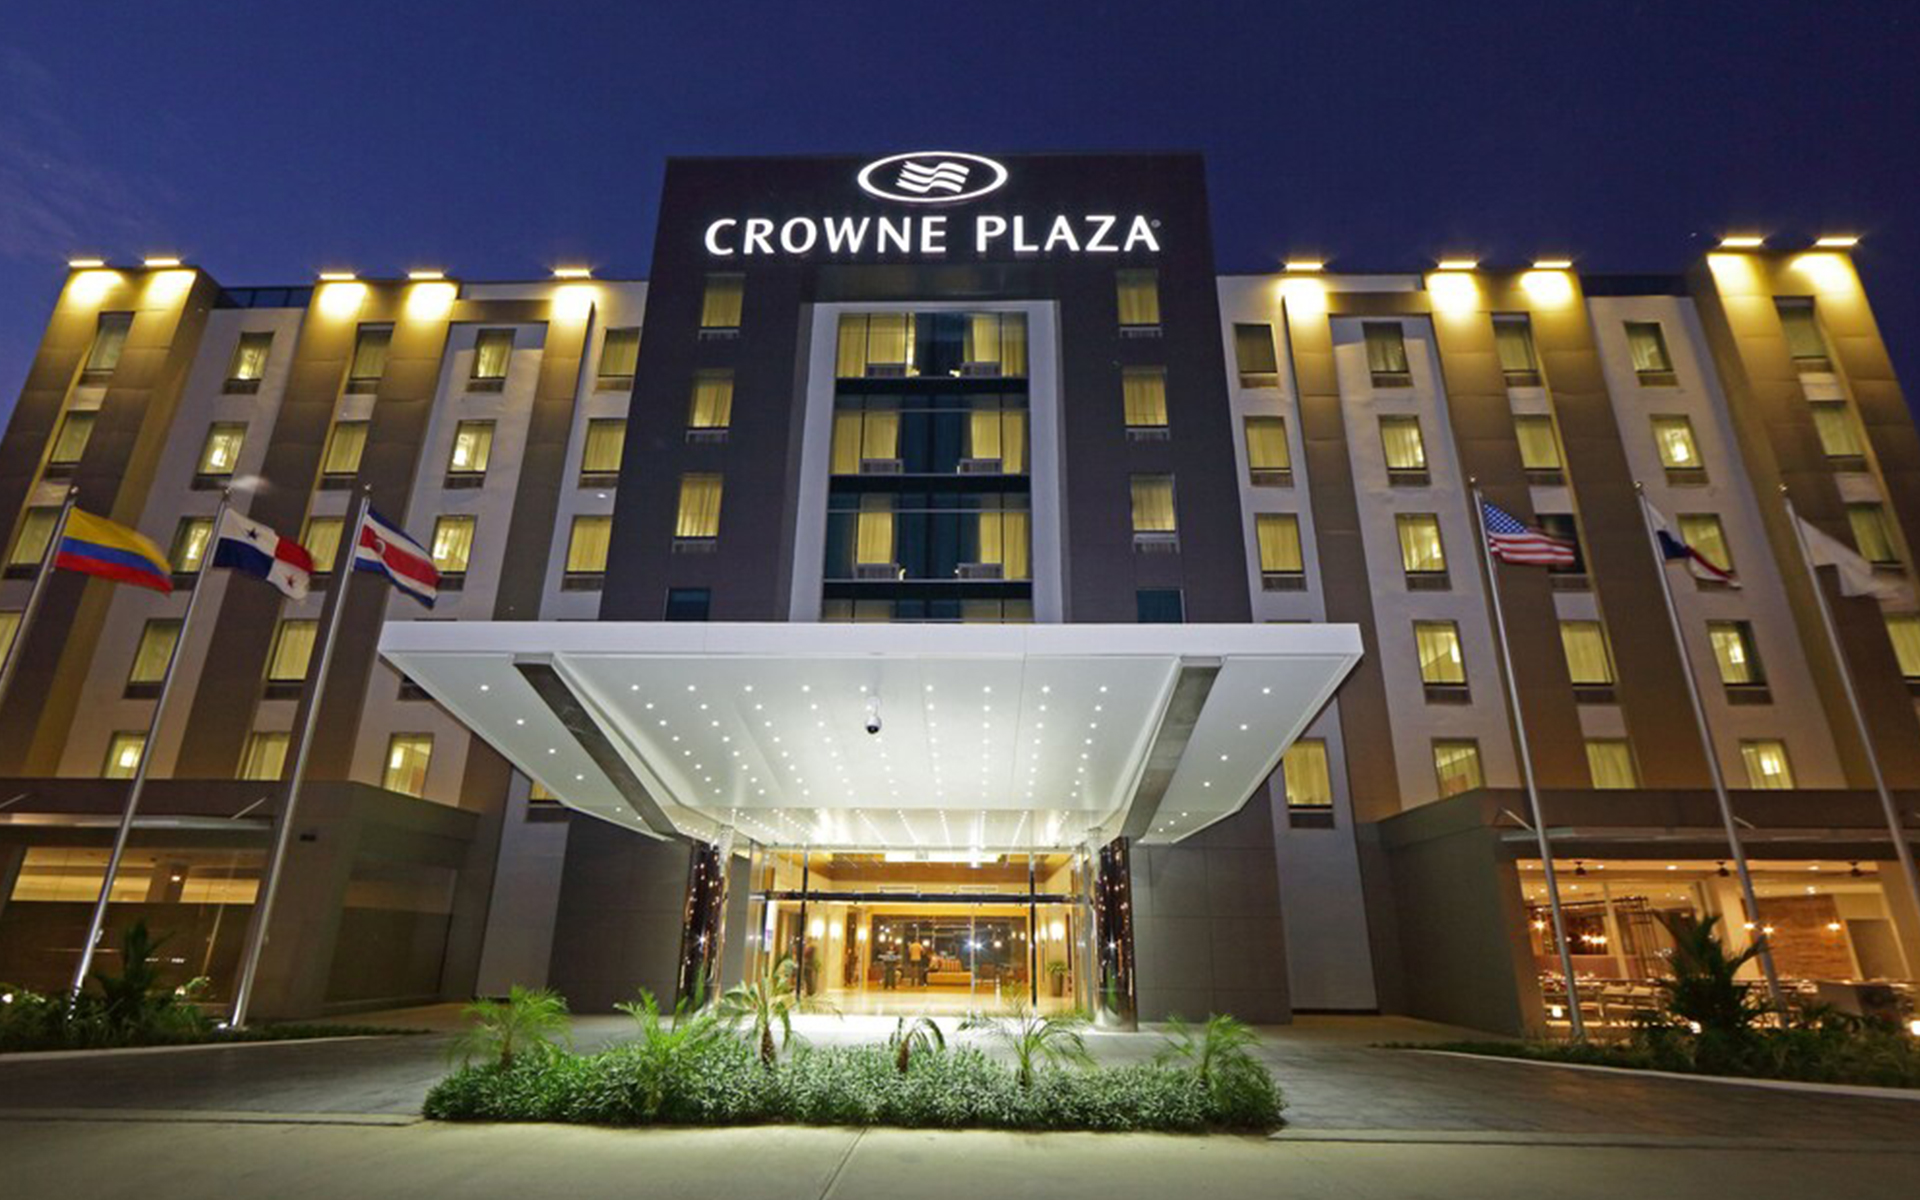 “CROWNE PLAZA” Hotel